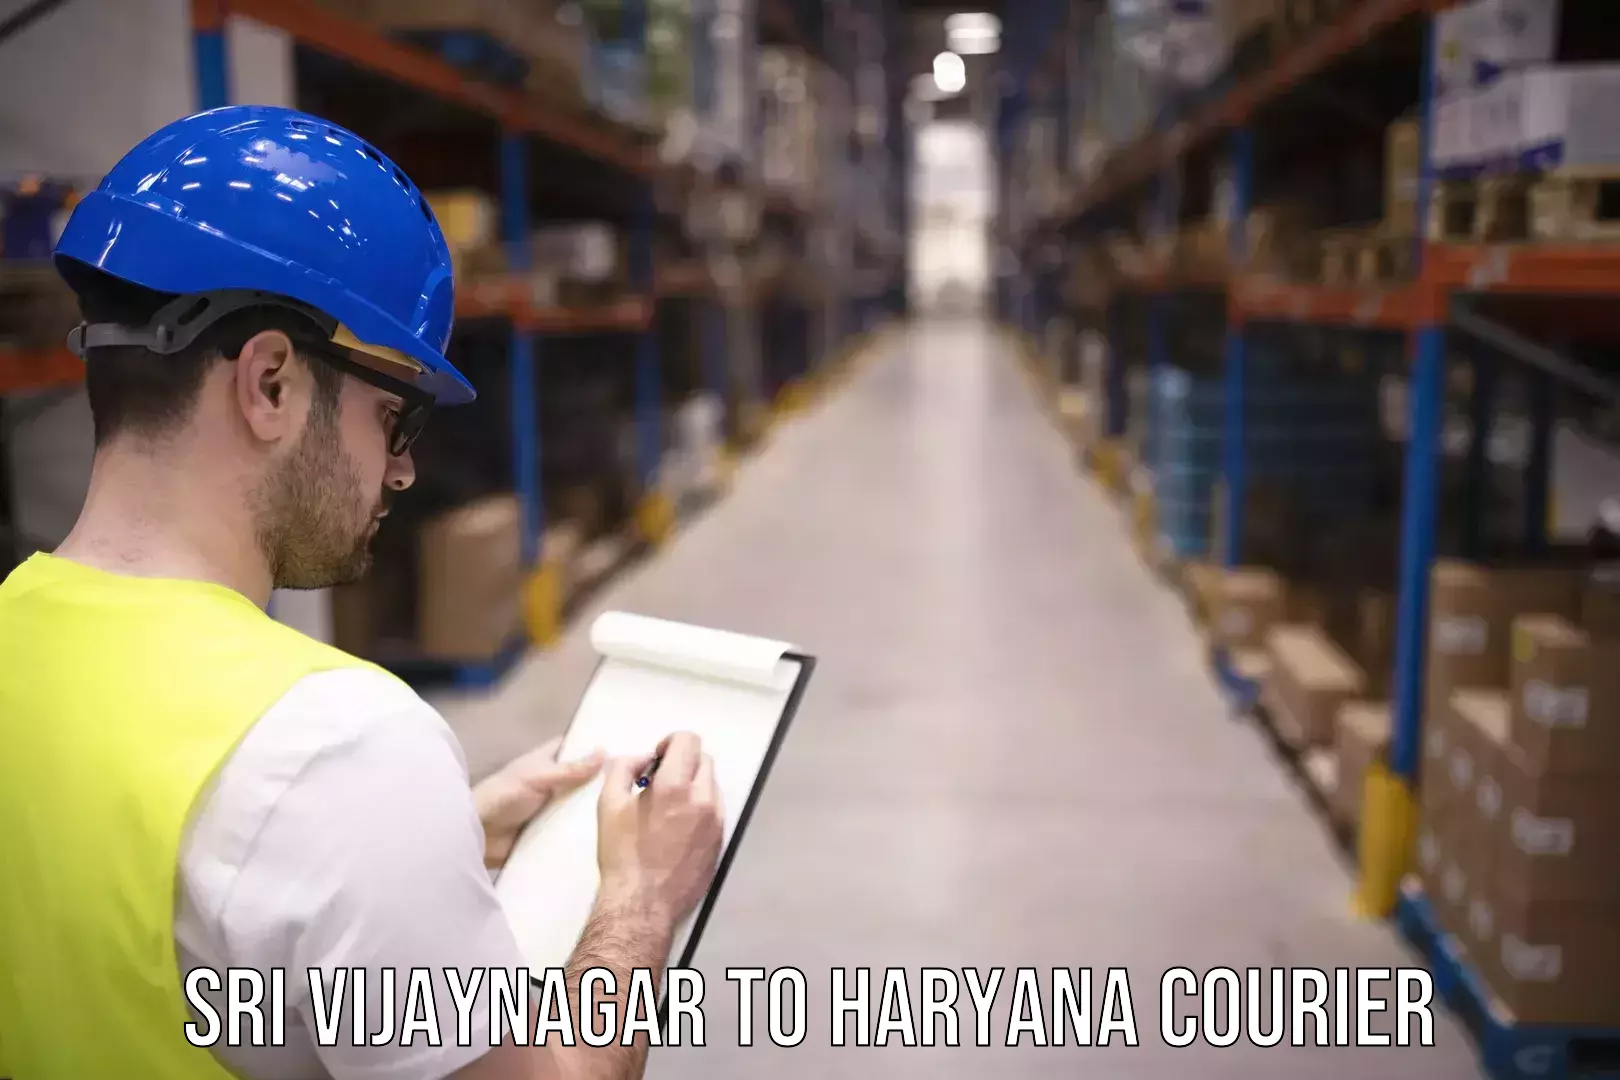 State-of-the-art courier technology Sri Vijaynagar to Hisar